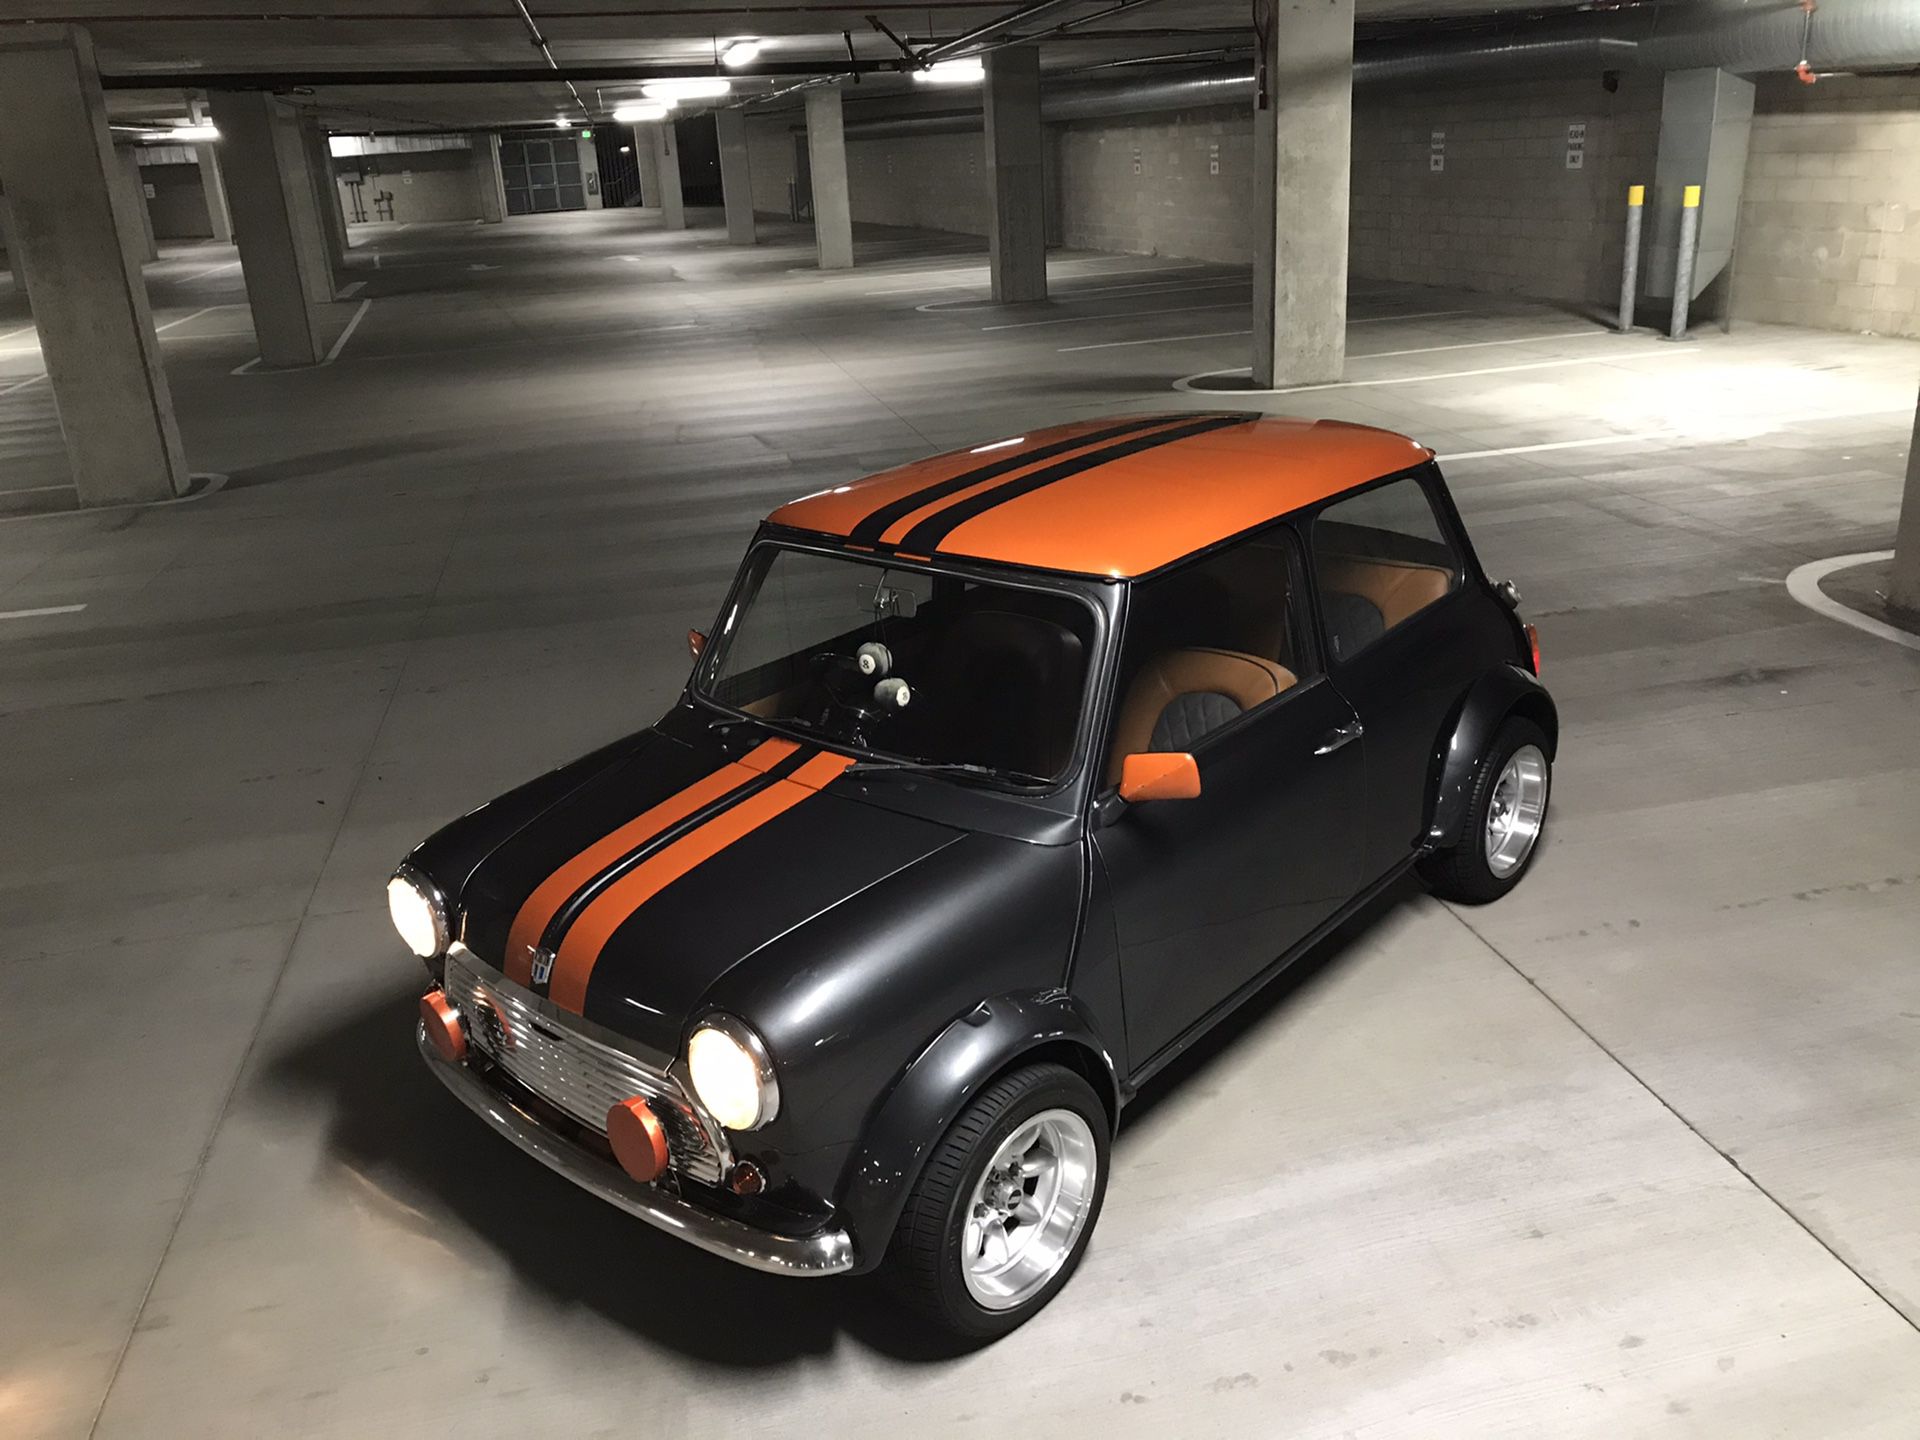 Mini Cooper Austin classic